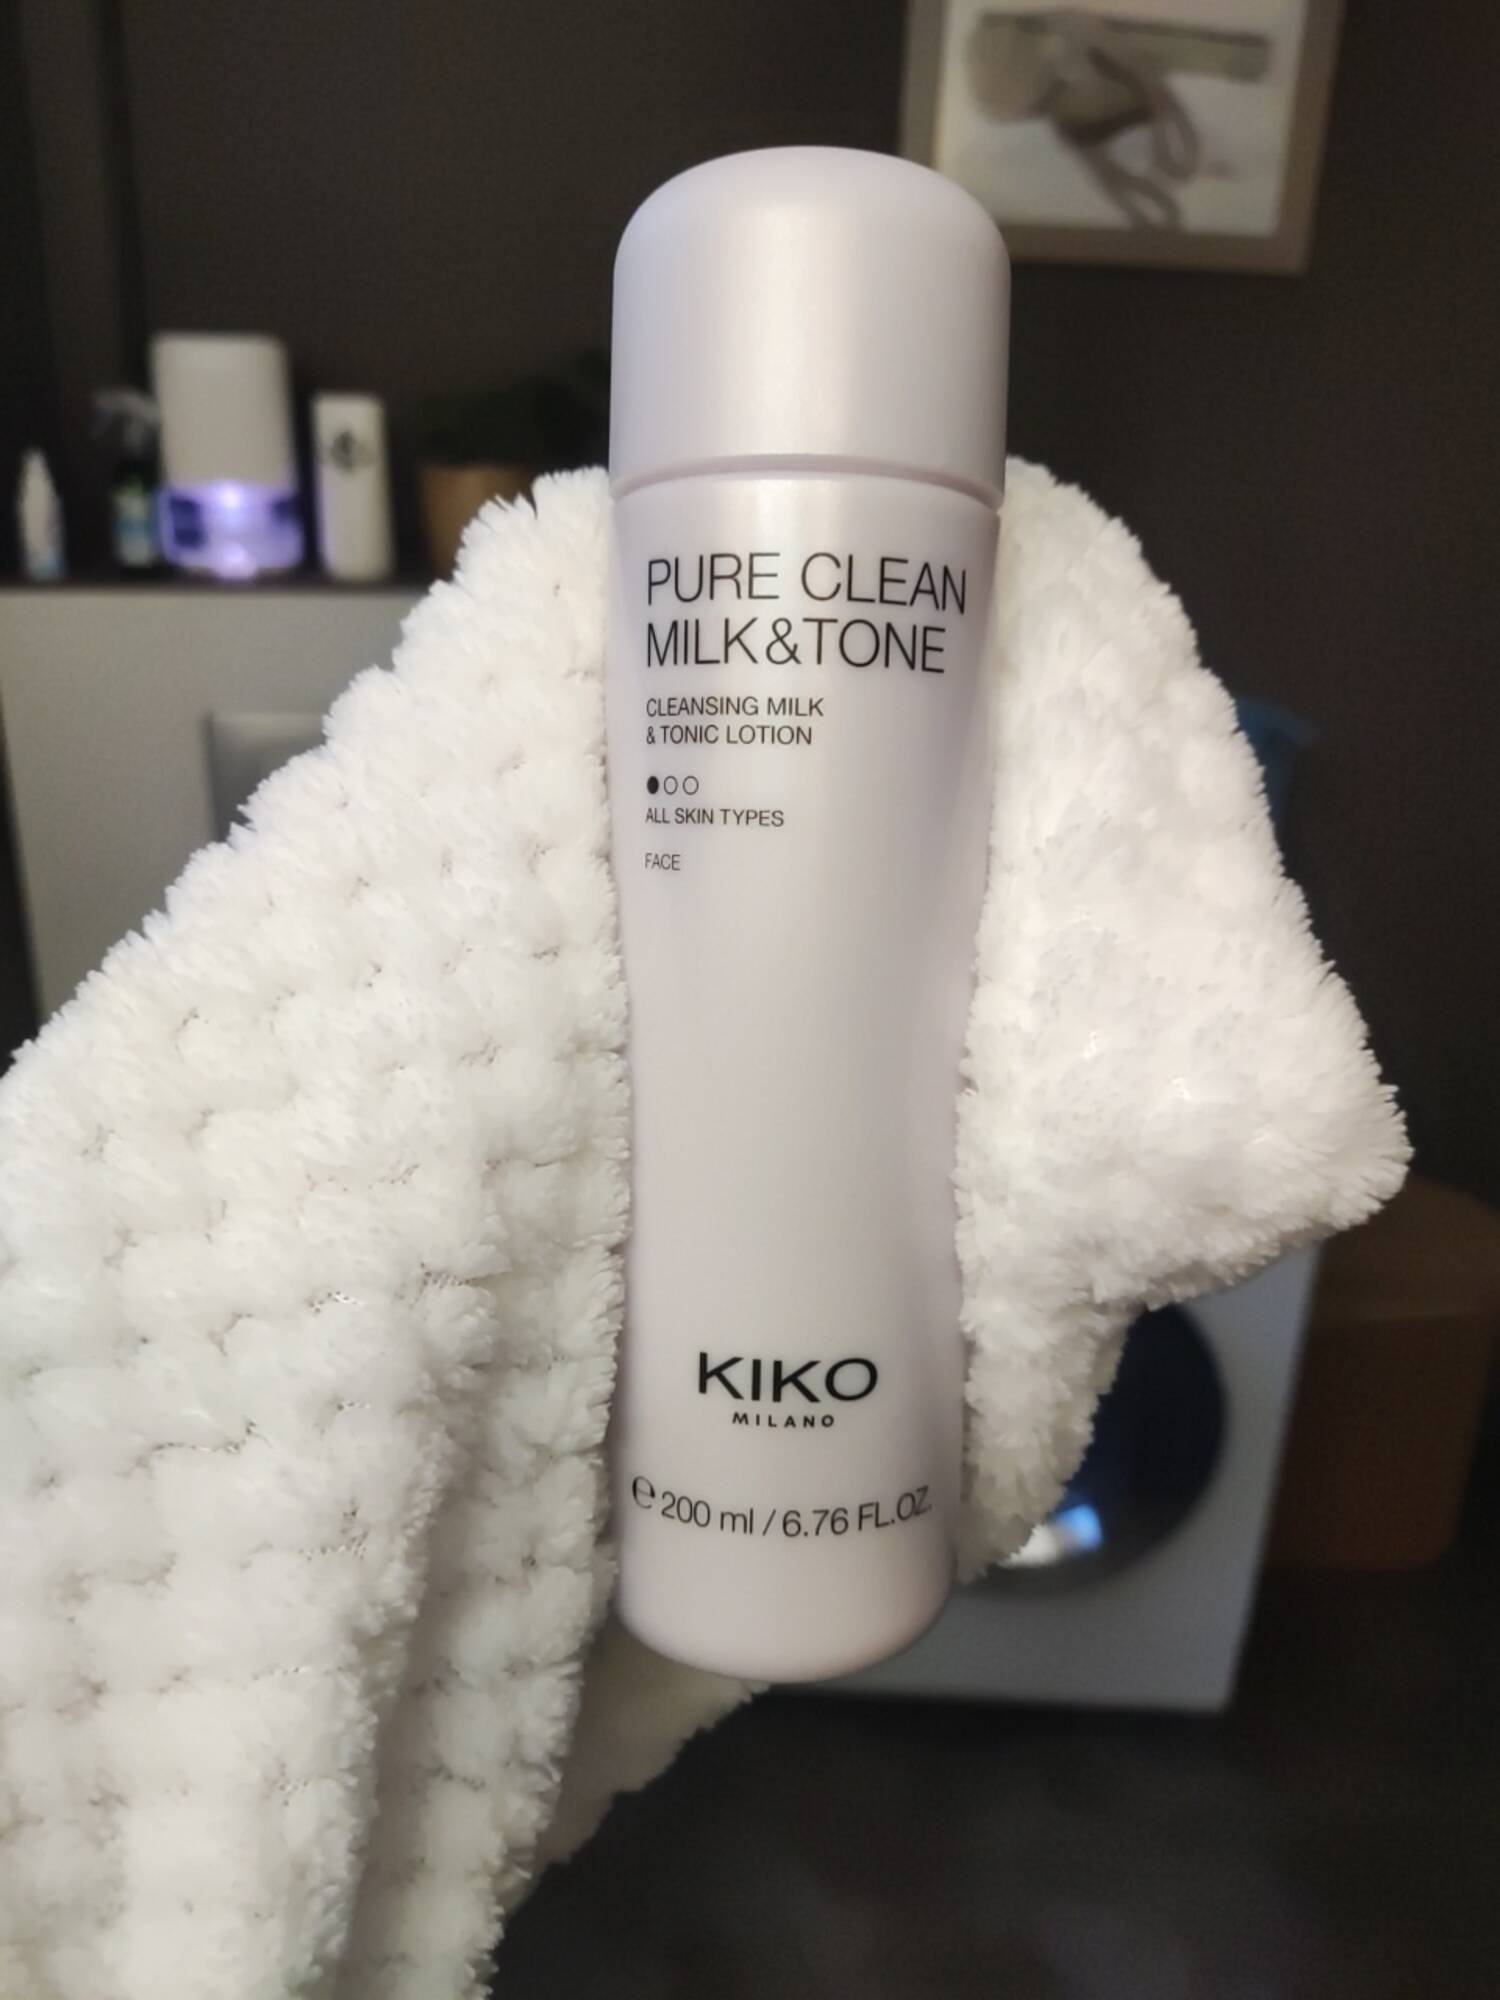 KIKO - Pure clean milk & tone - Cleansing milk & tonic lotion